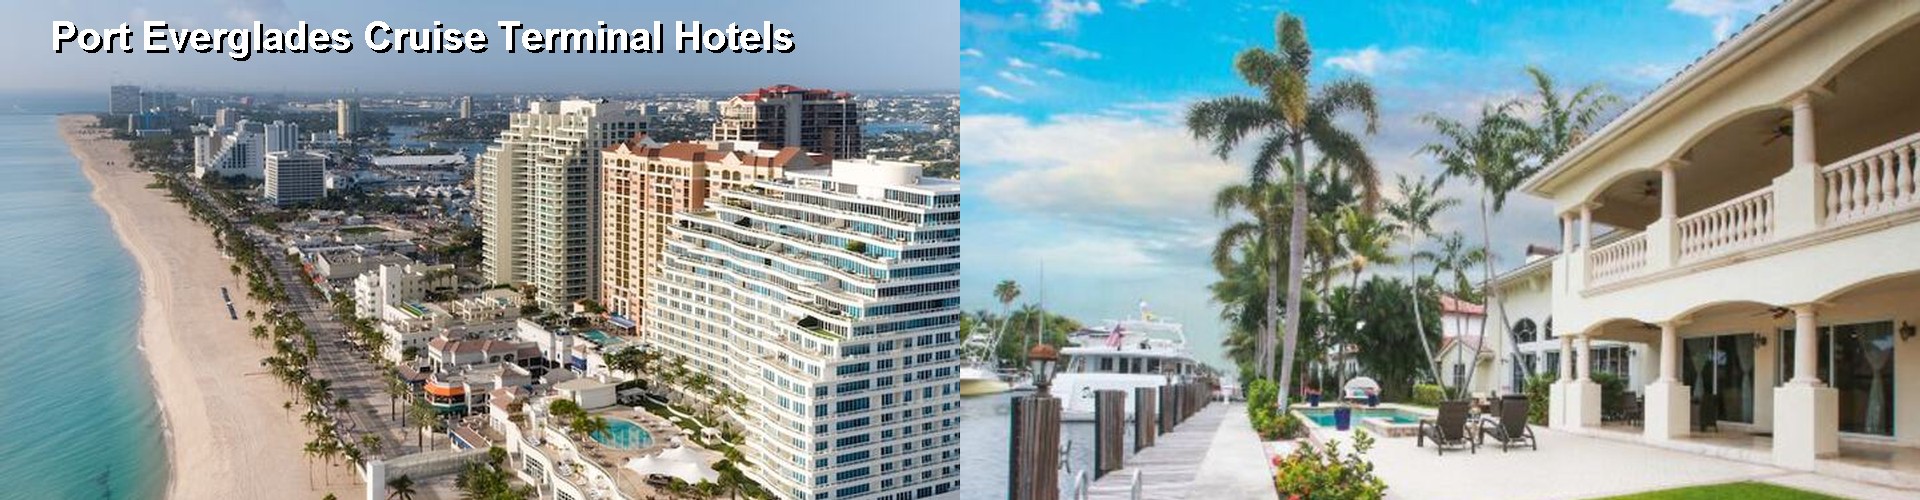 5 Best Hotels near Port Everglades Cruise Terminal